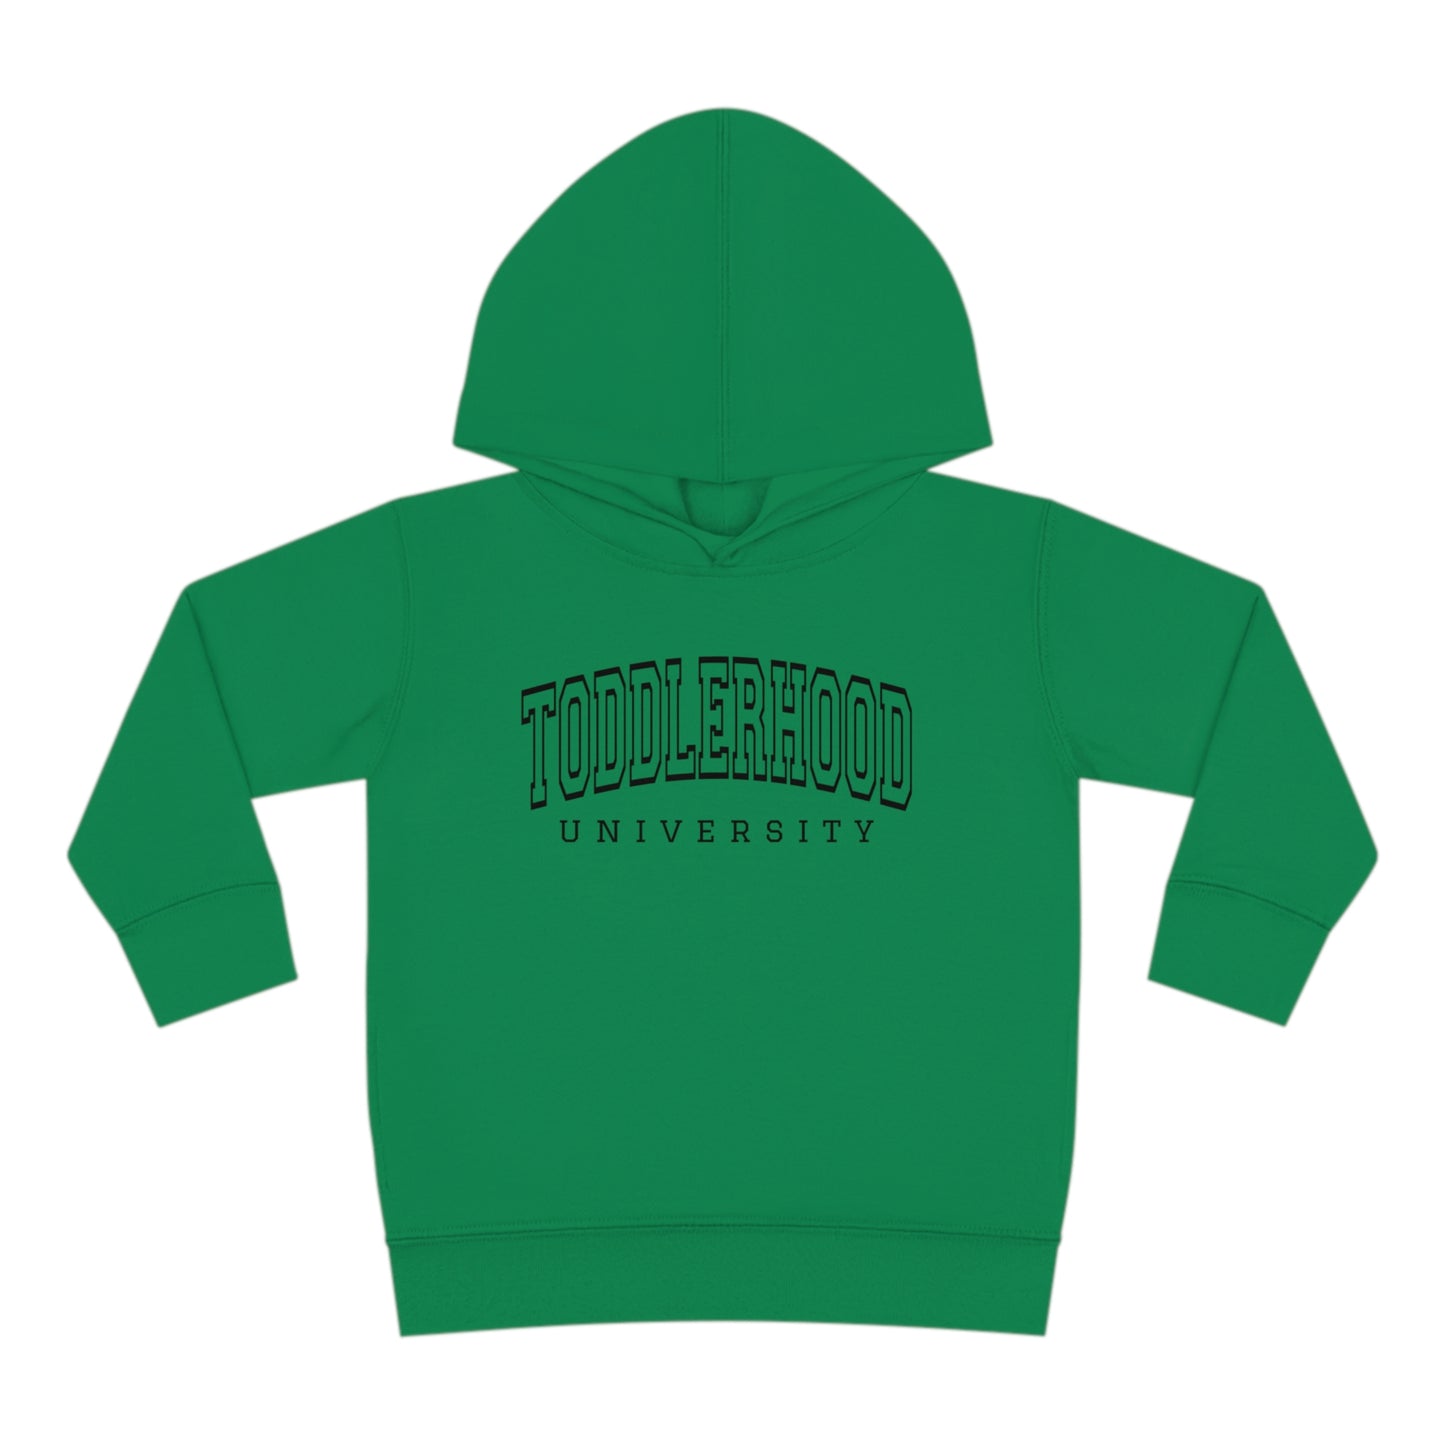 "Toddlerhood University" Toddler Pullover Fleece Hoodie (2T-6T)